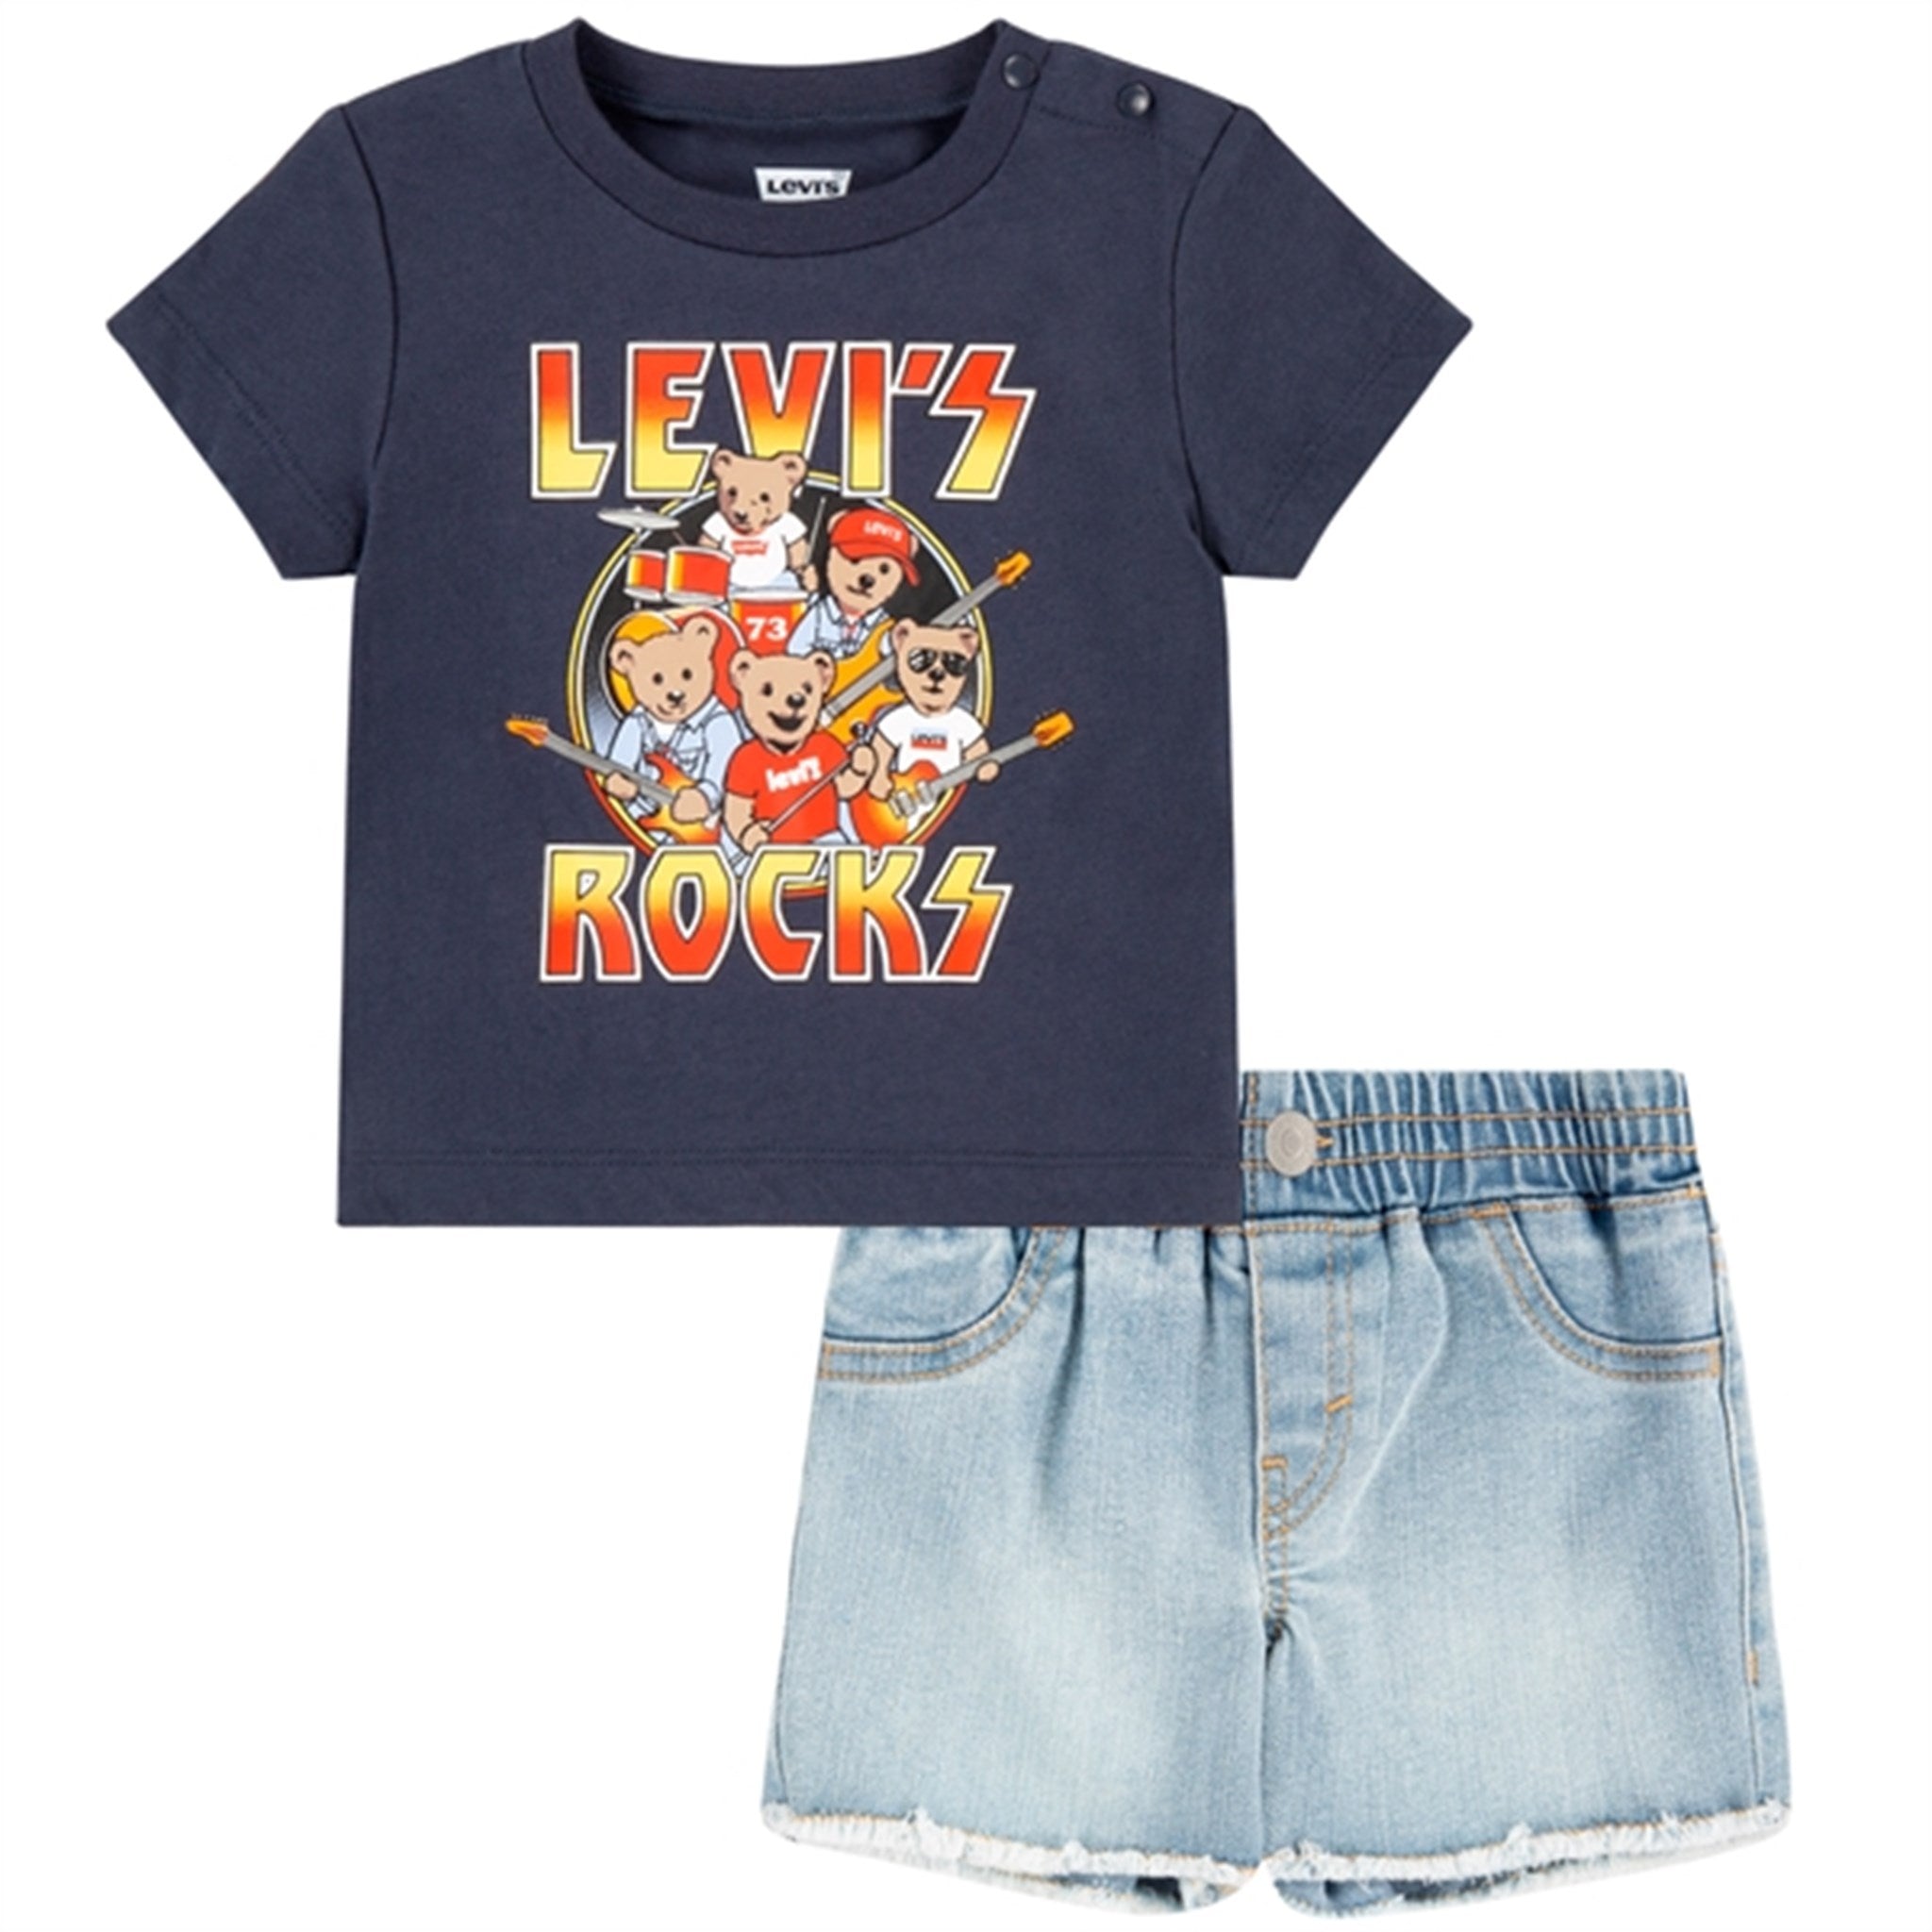 Levi's Rock and Roll Denim Sett Grey